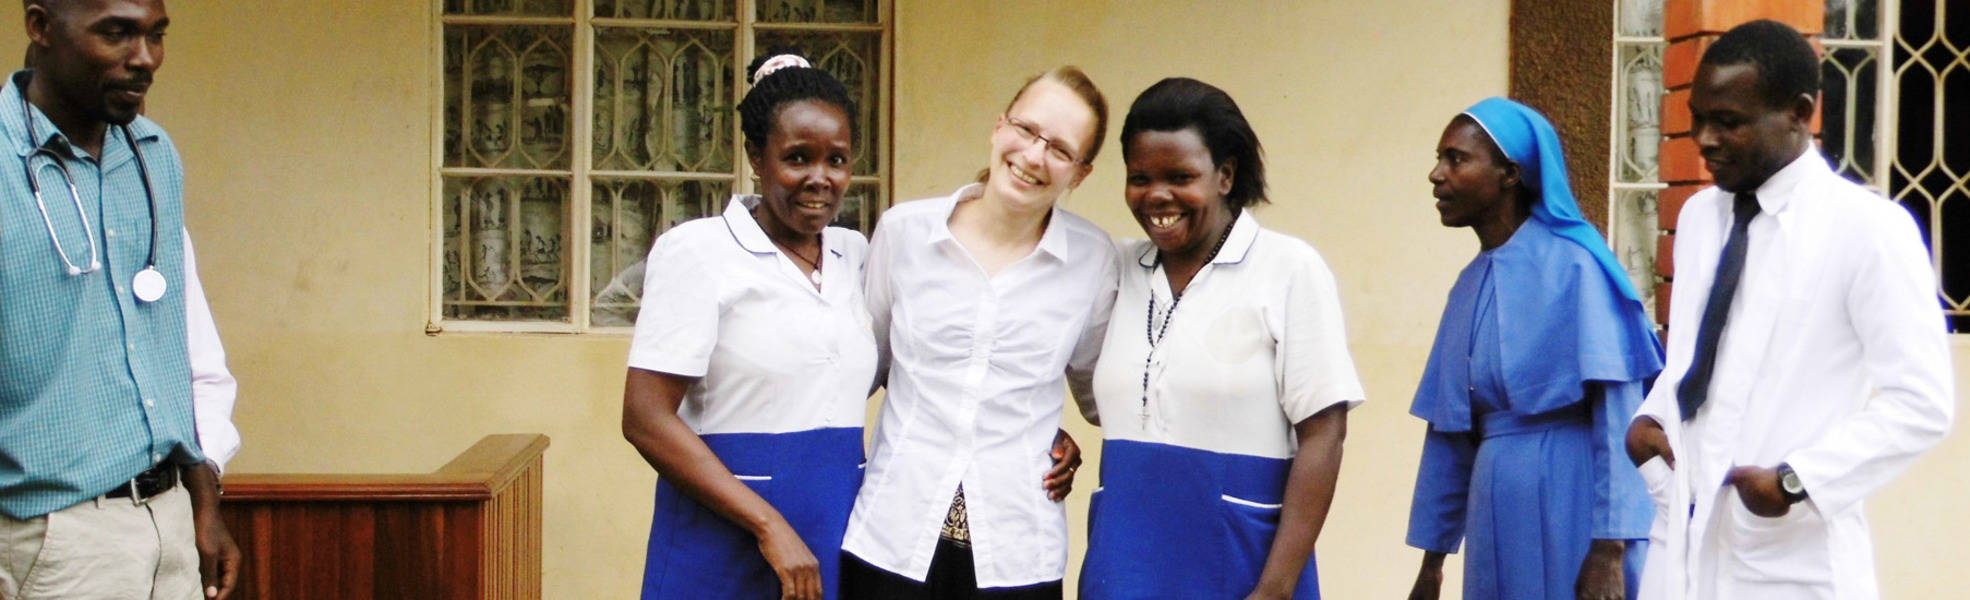 Freiwilligenarbeit in Uganda - Medizin Volunteer